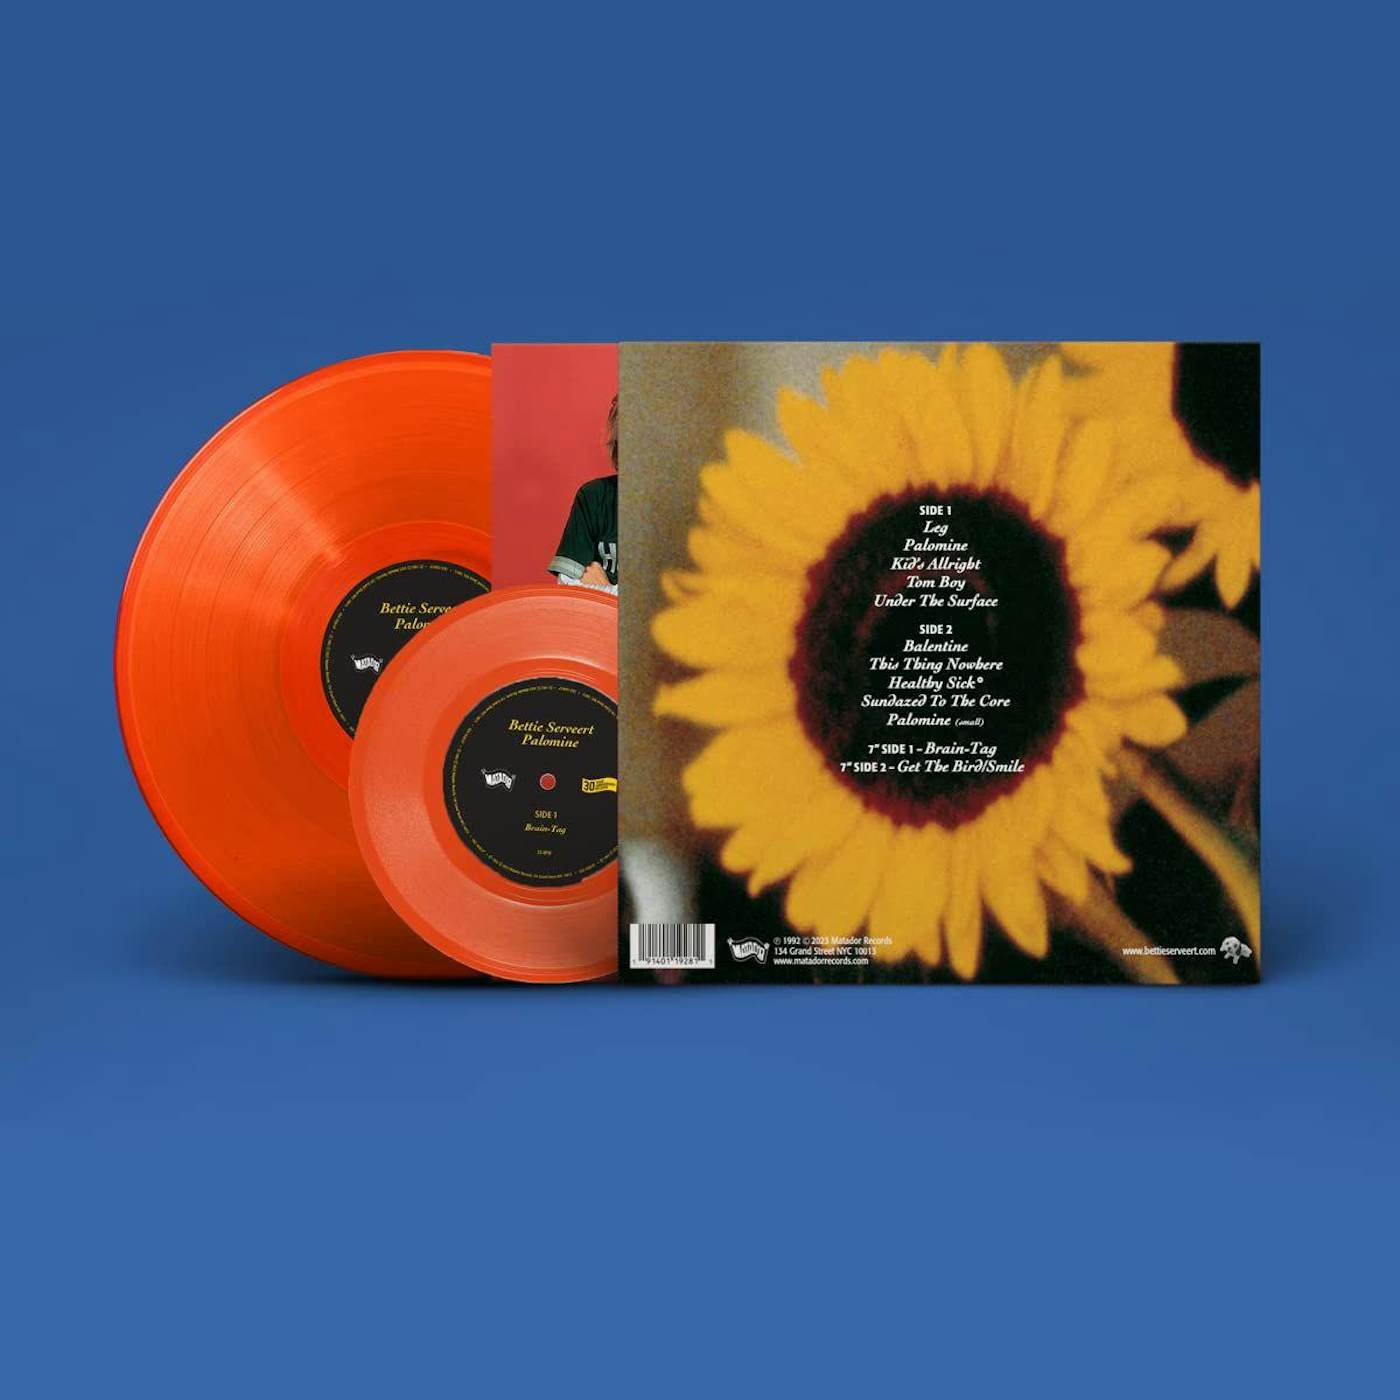 Bettie Serveert Palomine (Deluxe Edition/Transparent Orange) Vinyl Record